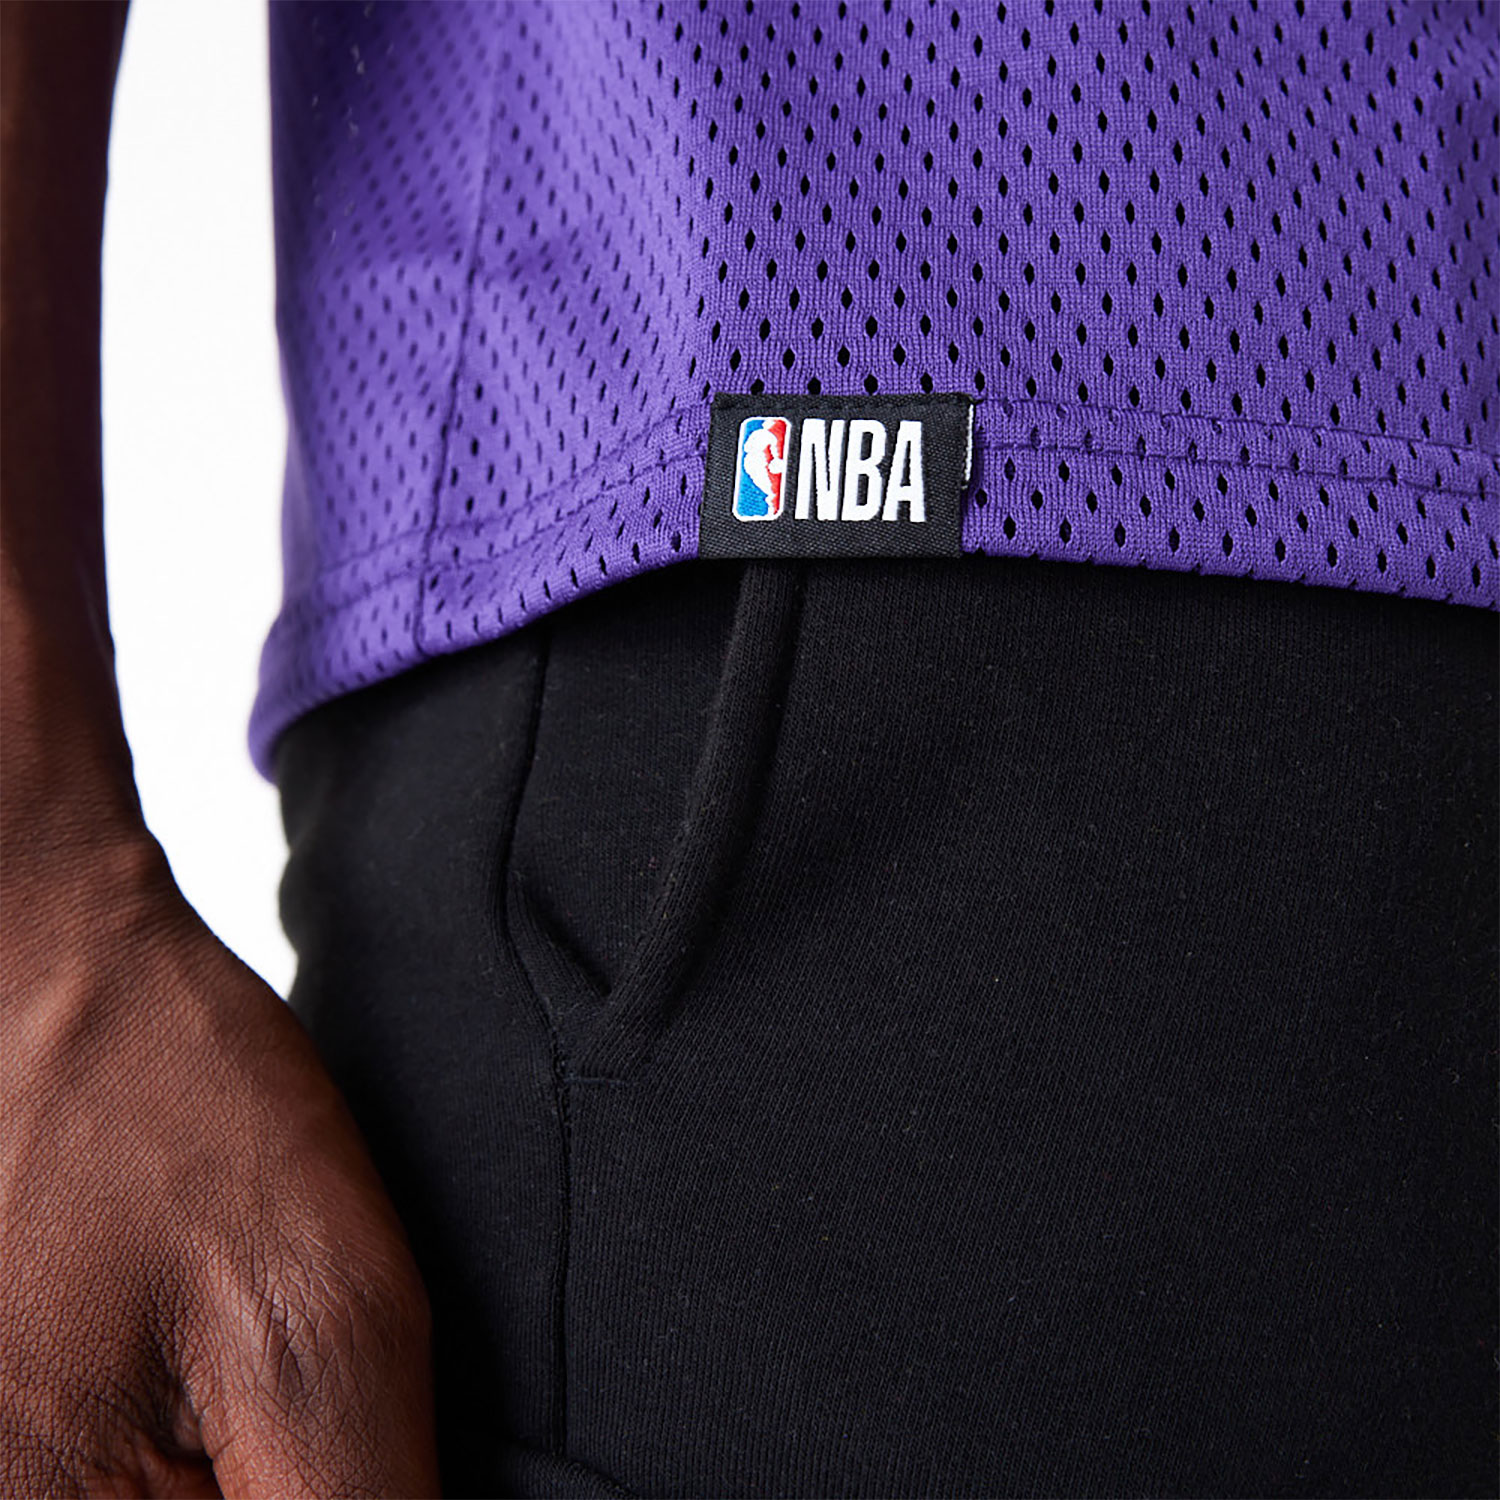 LA Lakers NBA Arch Graphic Jersey Purple T-Shirt